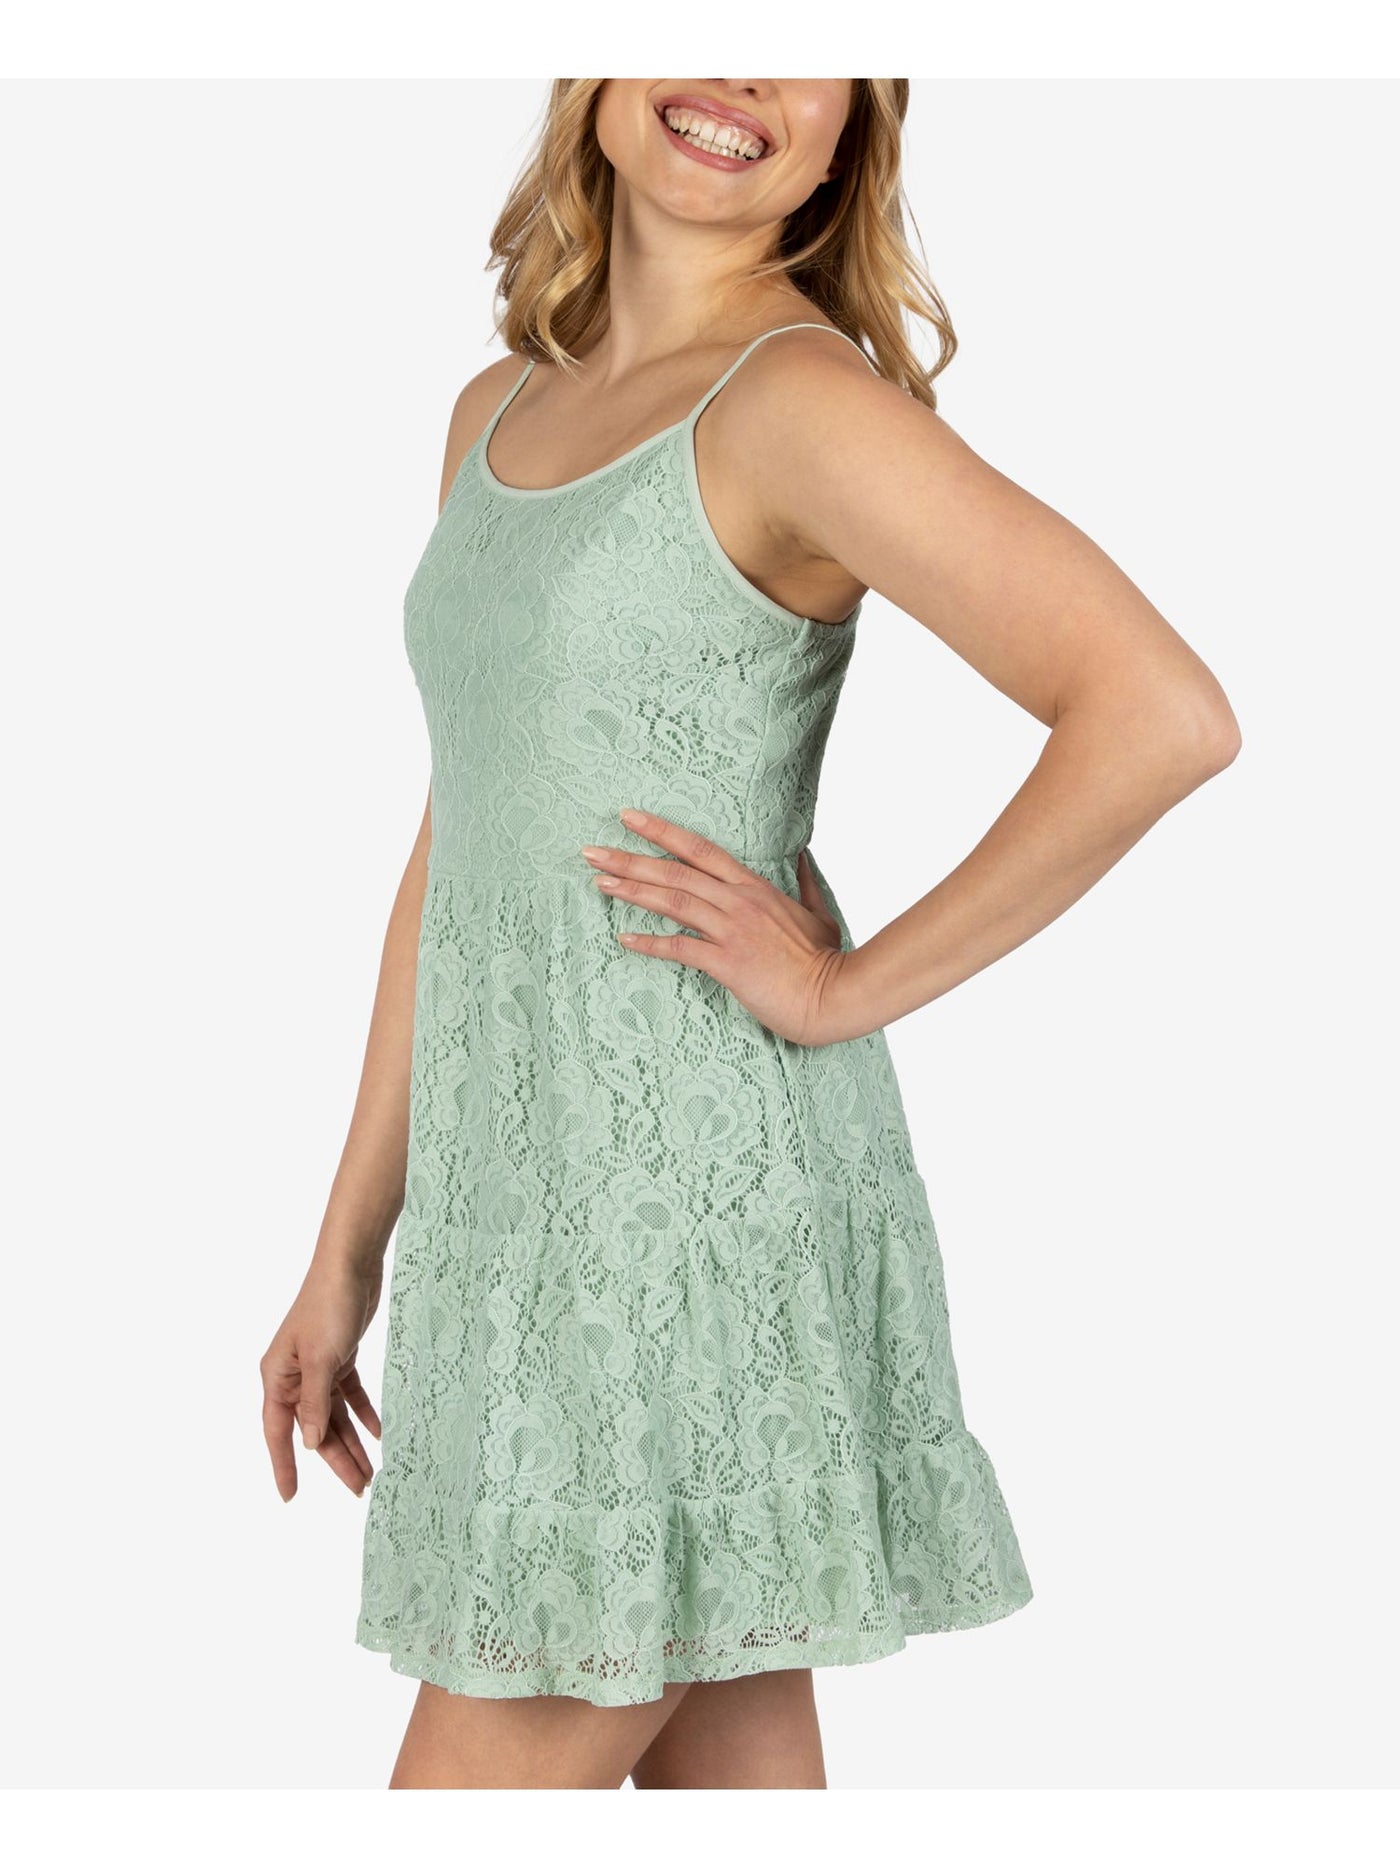 SPEECHLESS Womens Turquoise Lace Ruffled Spaghetti Strap Jewel Neck Short Dress Juniors S